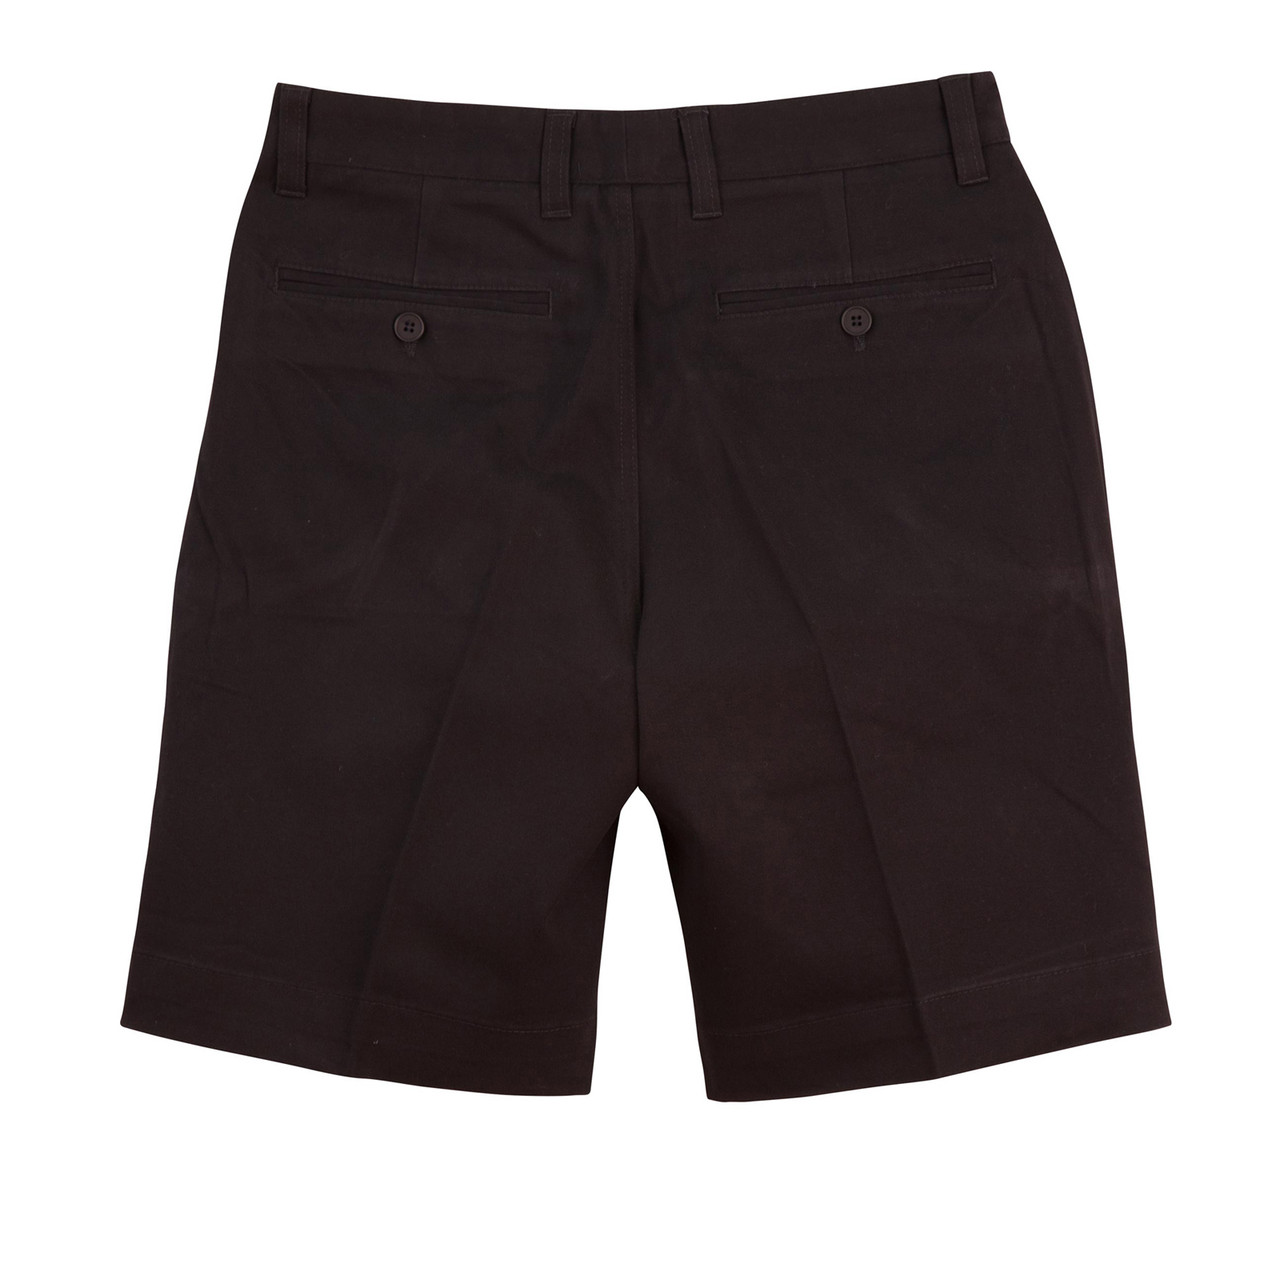 Mens Chino Shorts With Pockets | Shop Blank Clothing Wholesale & Save